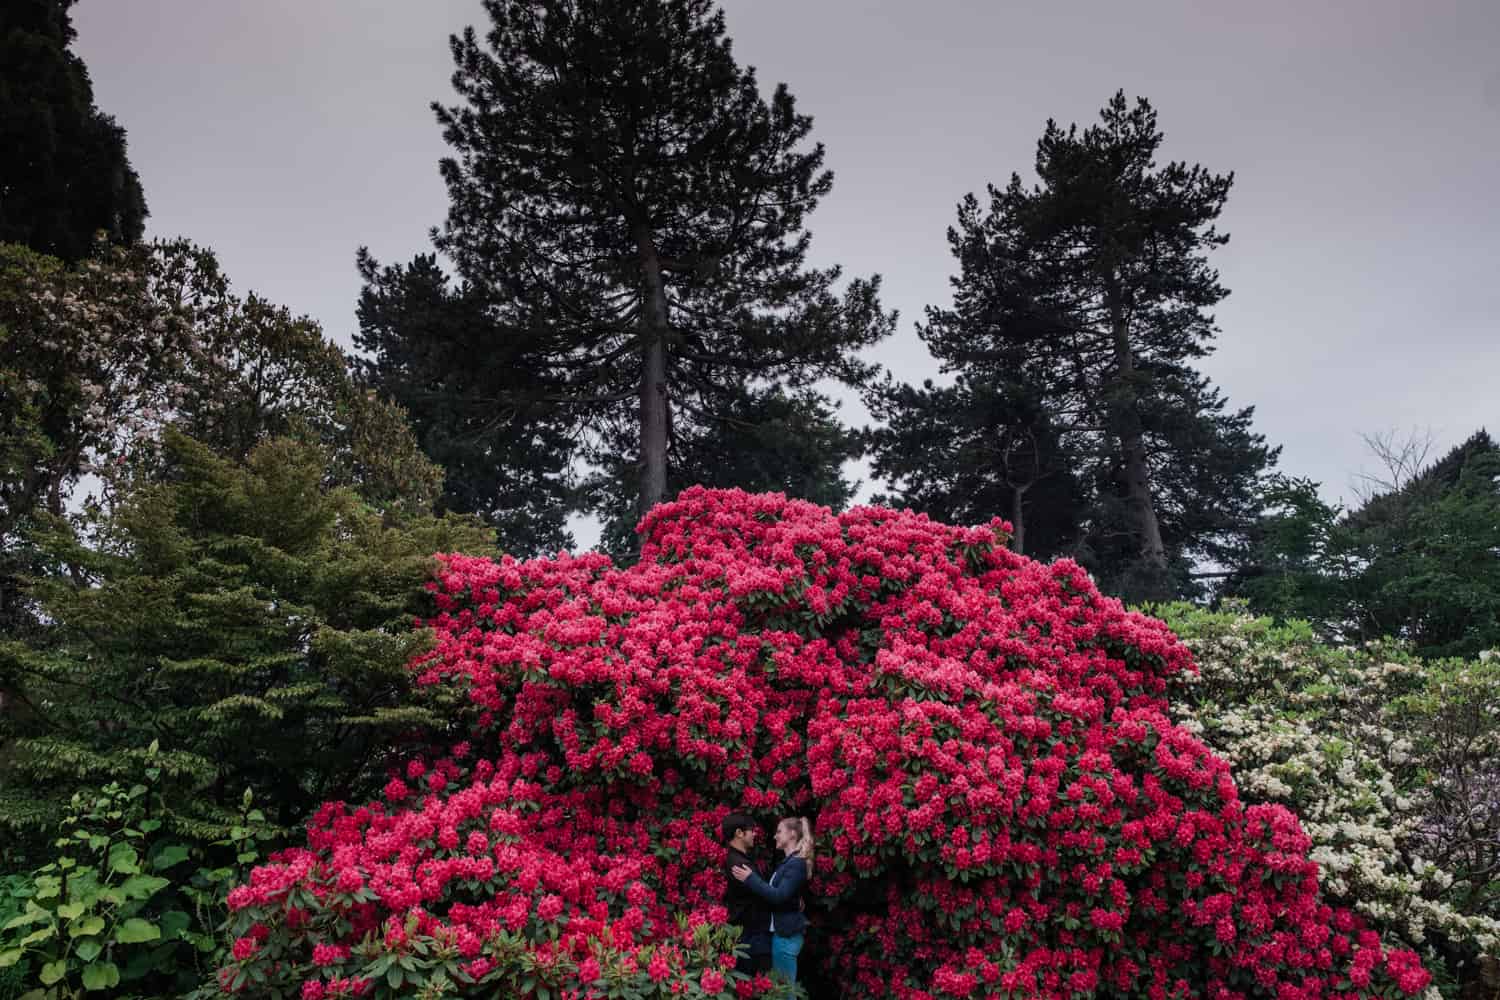 Edinburgh botanic gardens one of the romantic places in edinburgh to propose